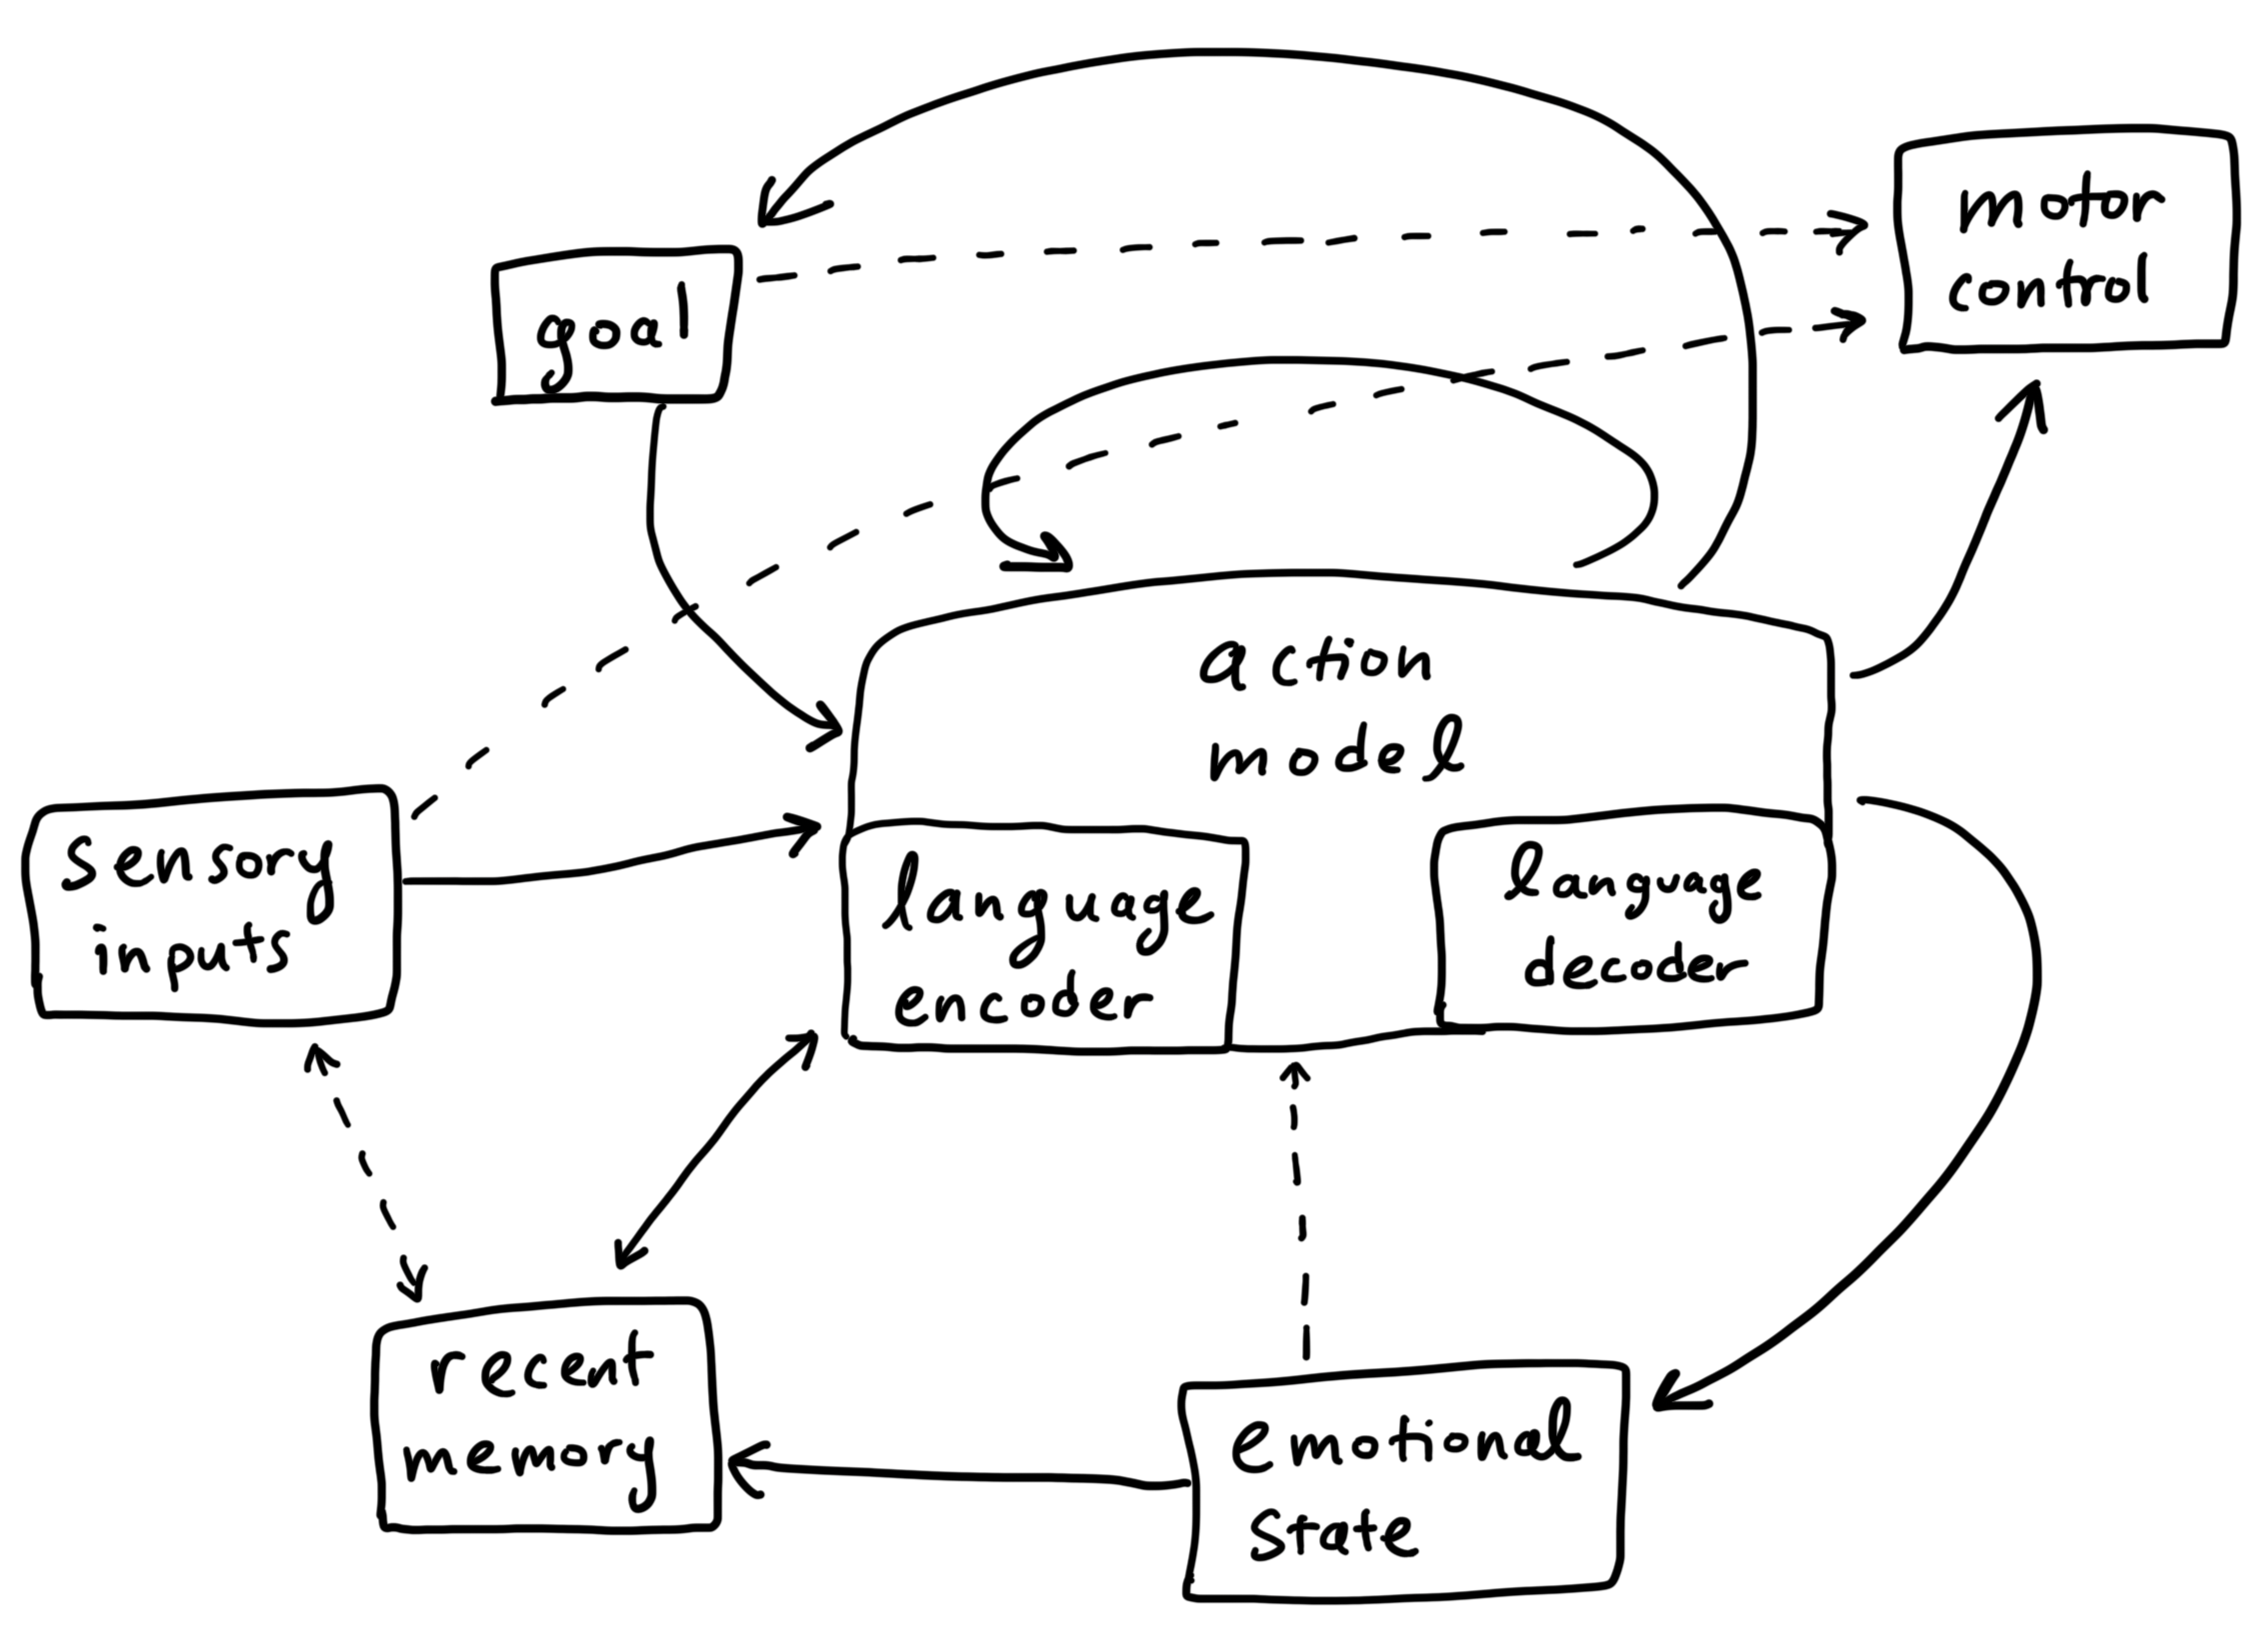 Data flow diagram for a model of a mind.